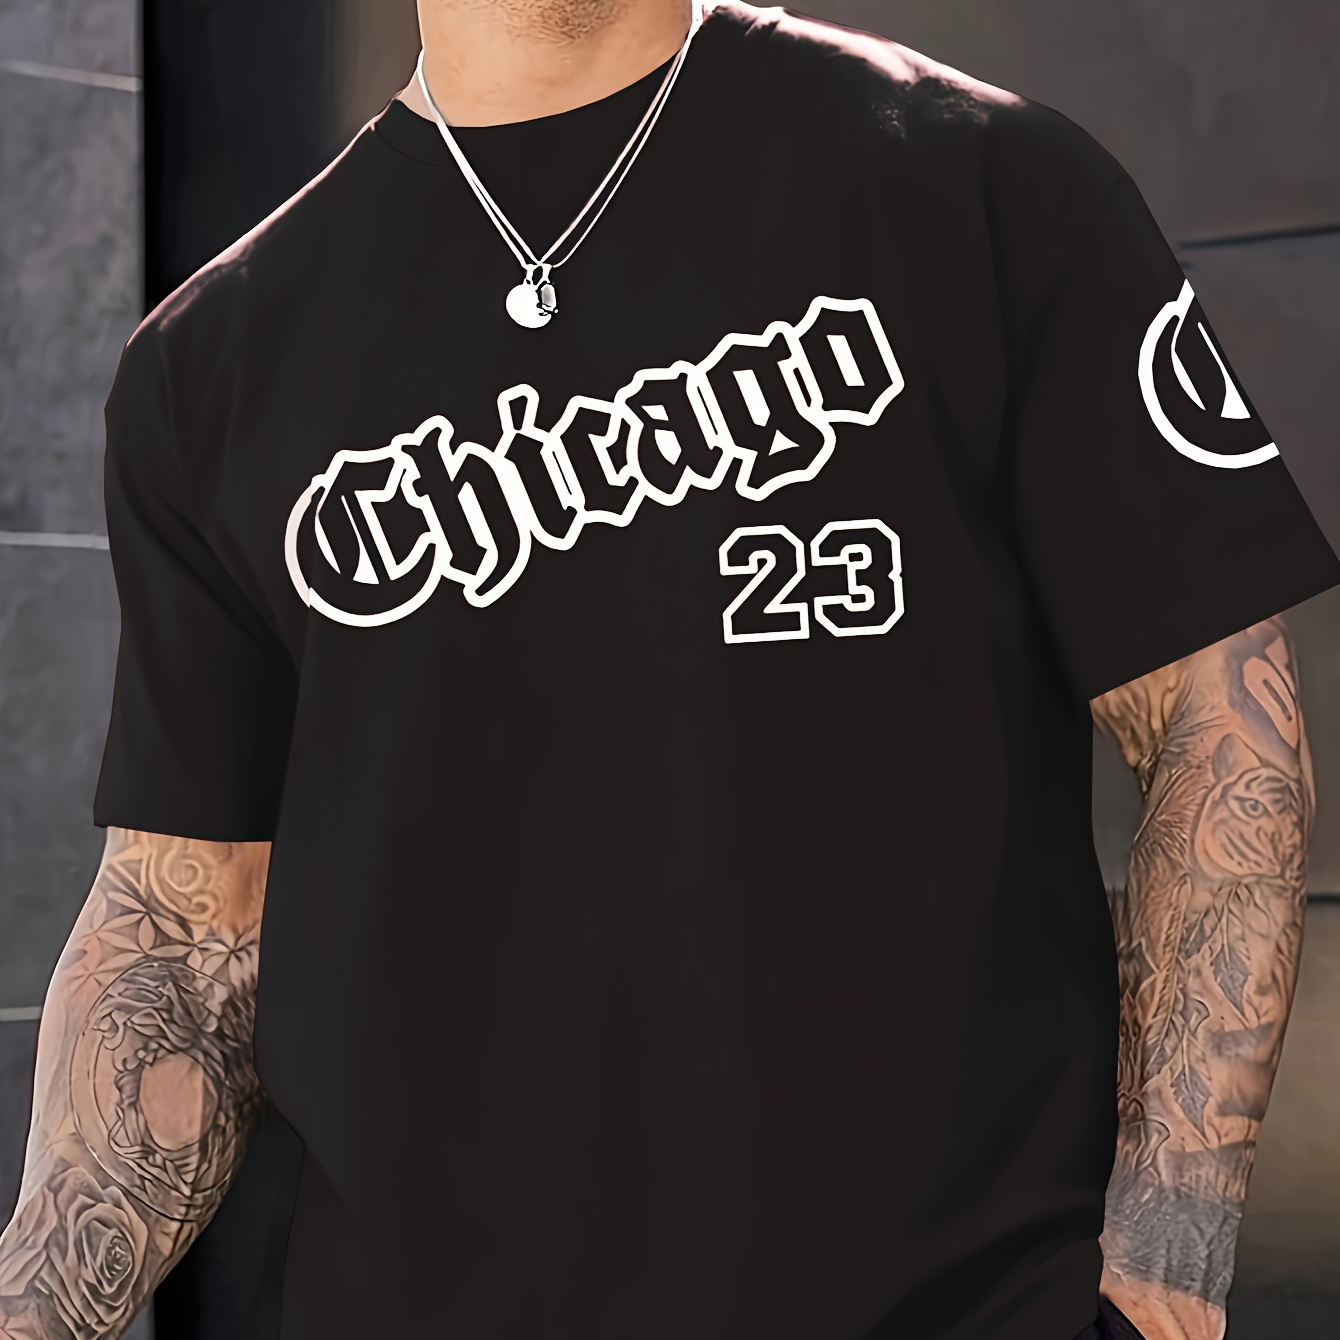 

Chicago 23 Print Men's Casual Sports Short Sleeve Crew Neck T-shirt, Summer Outdoor